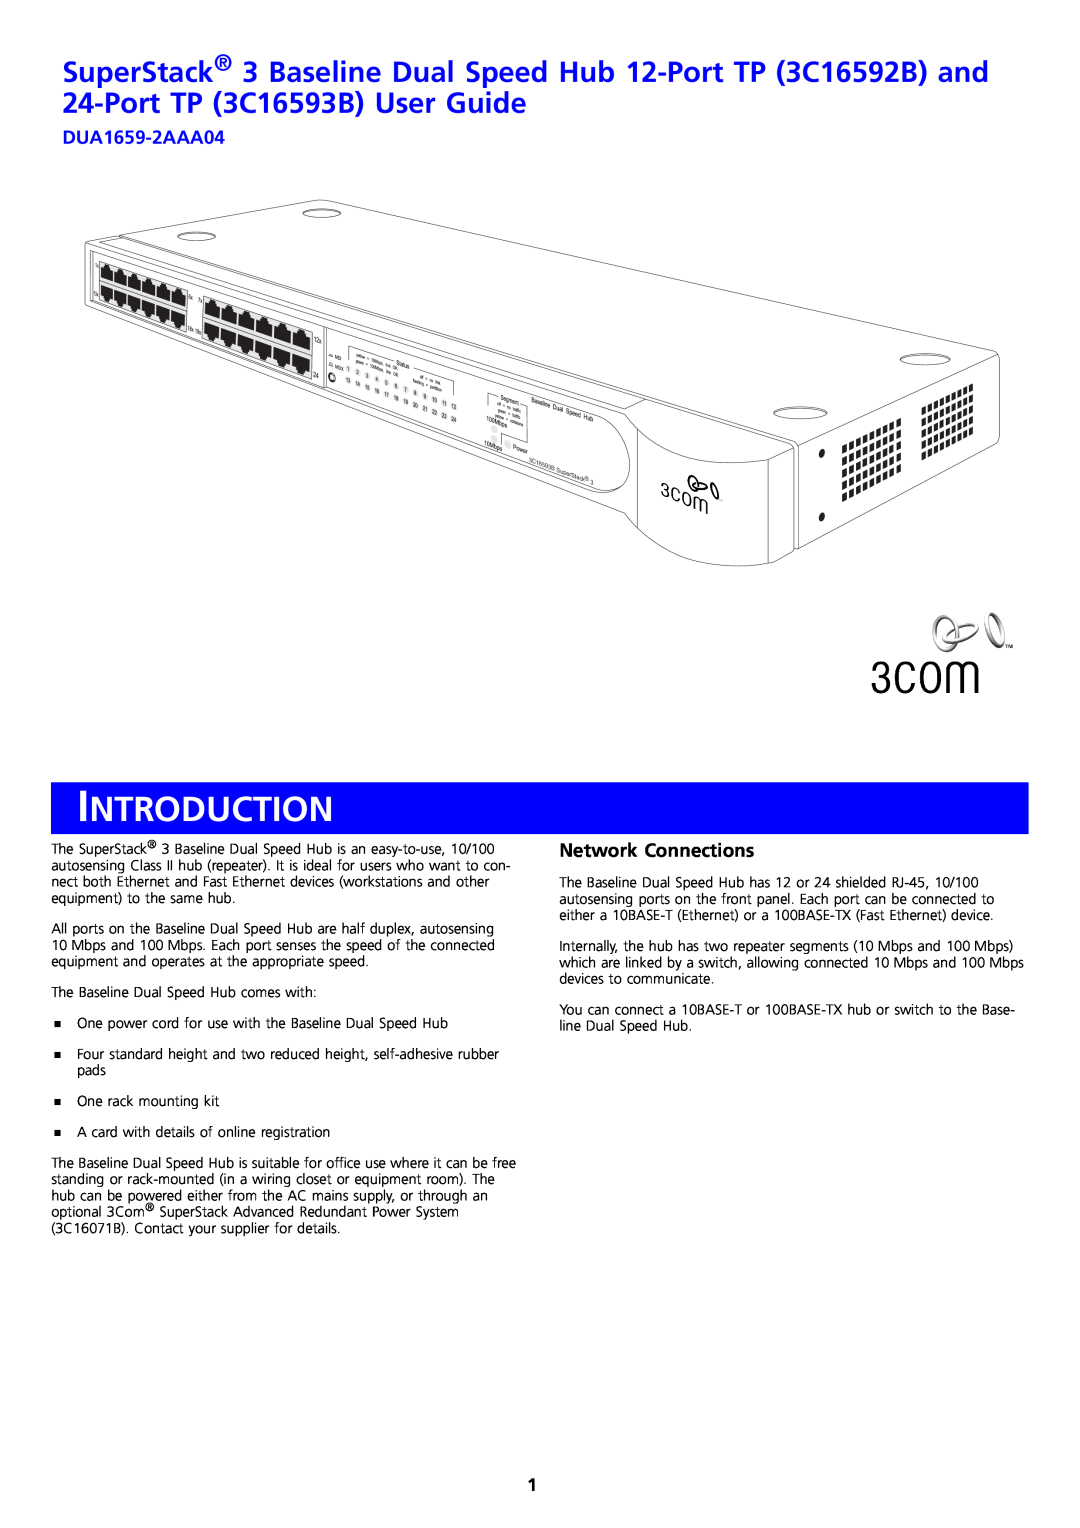 3Com 3C16592B, 3C16593B manual Introduction, DUA1659-2AAA04, Network Connections 